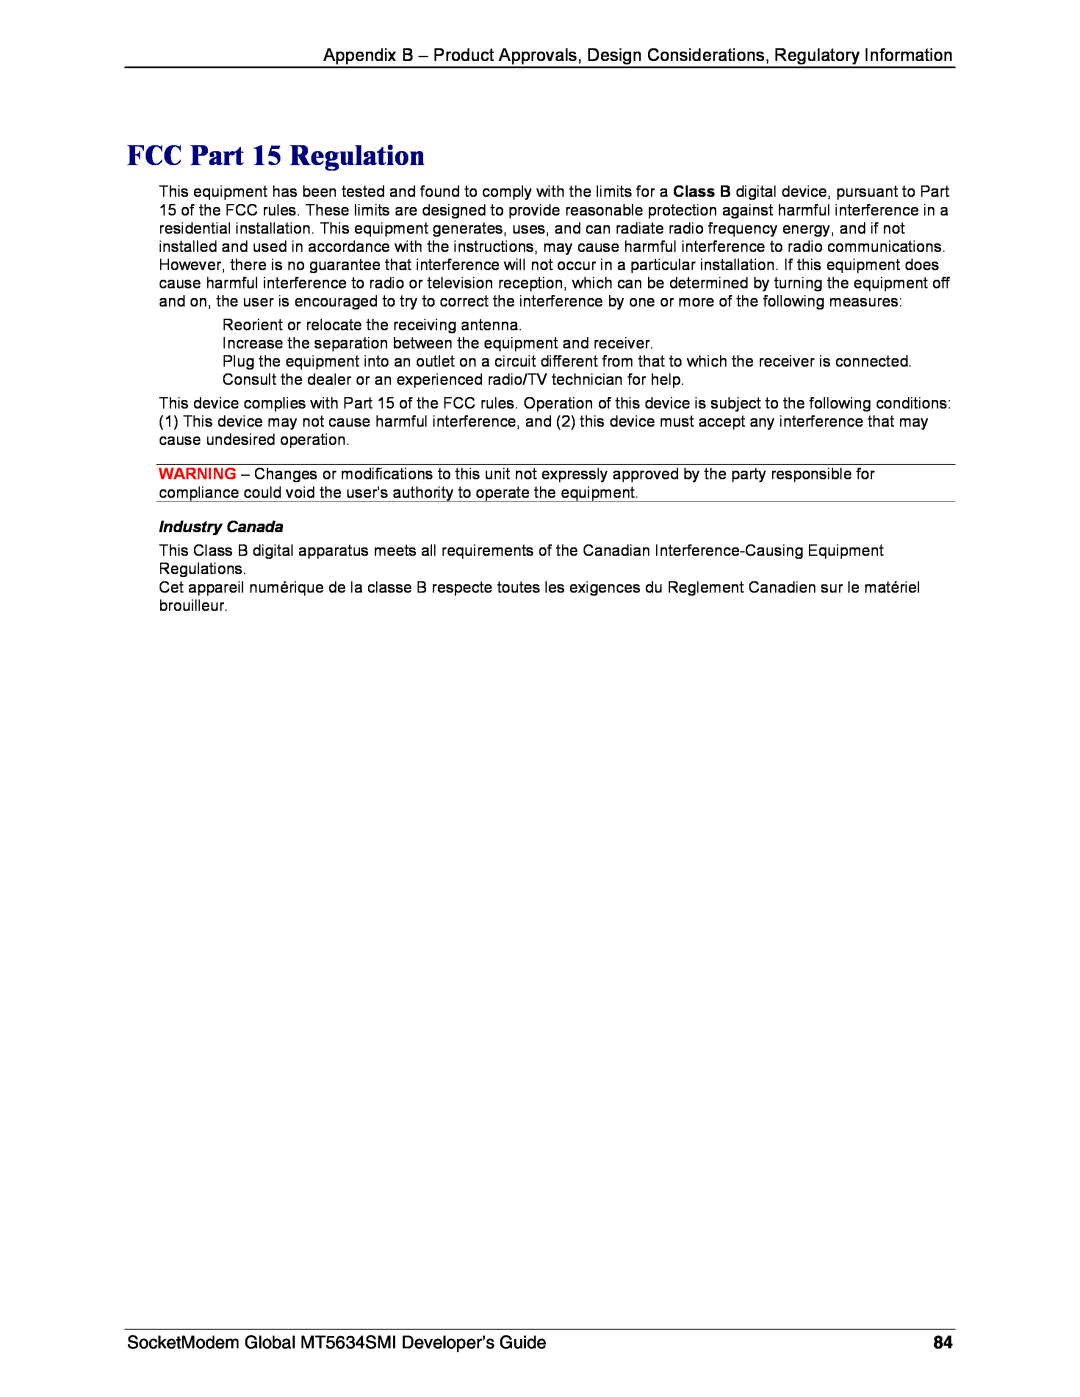 Technics MT5634SMI-92 manual FCC Part 15 Regulation, SocketModem Global MT5634SMI Developer’s Guide, Industry Canada 